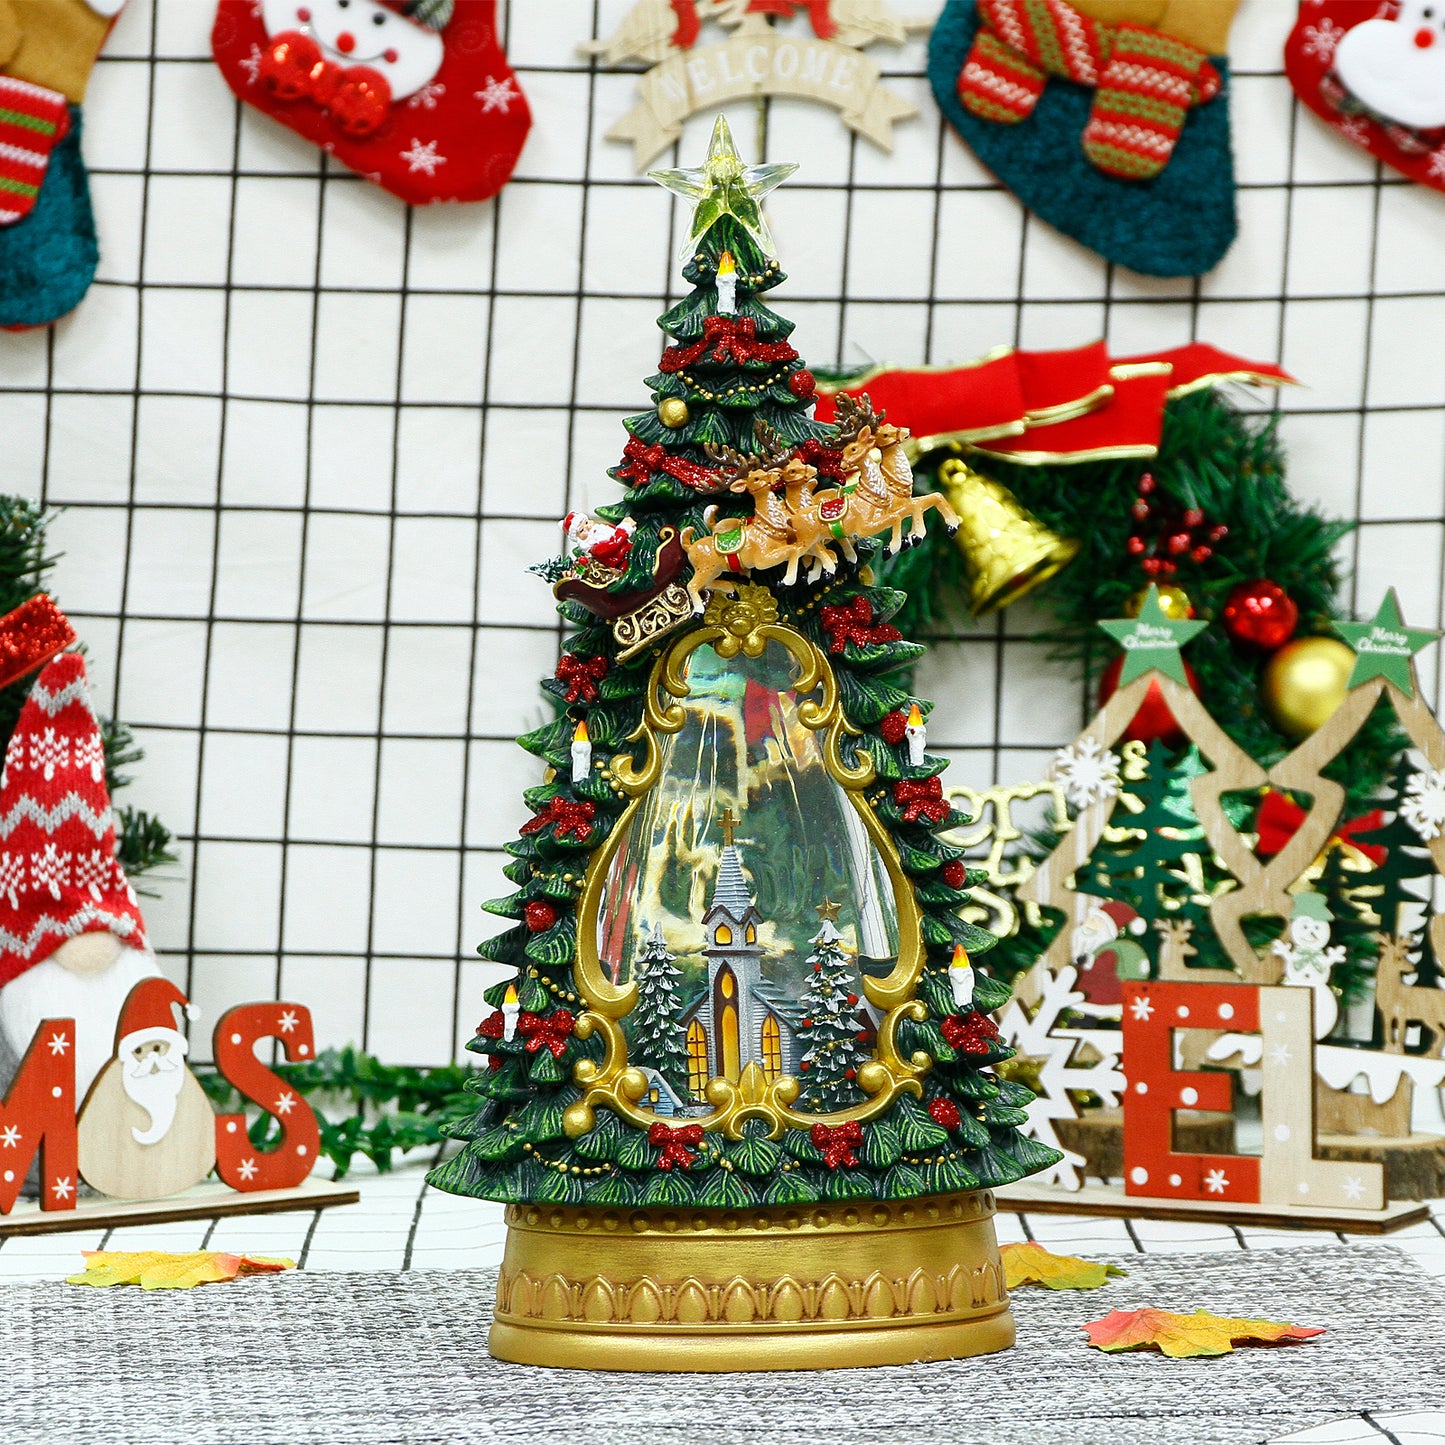 Christmas Snow Globe,Snow Globe Decorations Christian Gifts，Christmas Festival Snow Globe , with Musical Santa Claus, Christmas Tree,Churches,Water Glittering Lantern Swirling